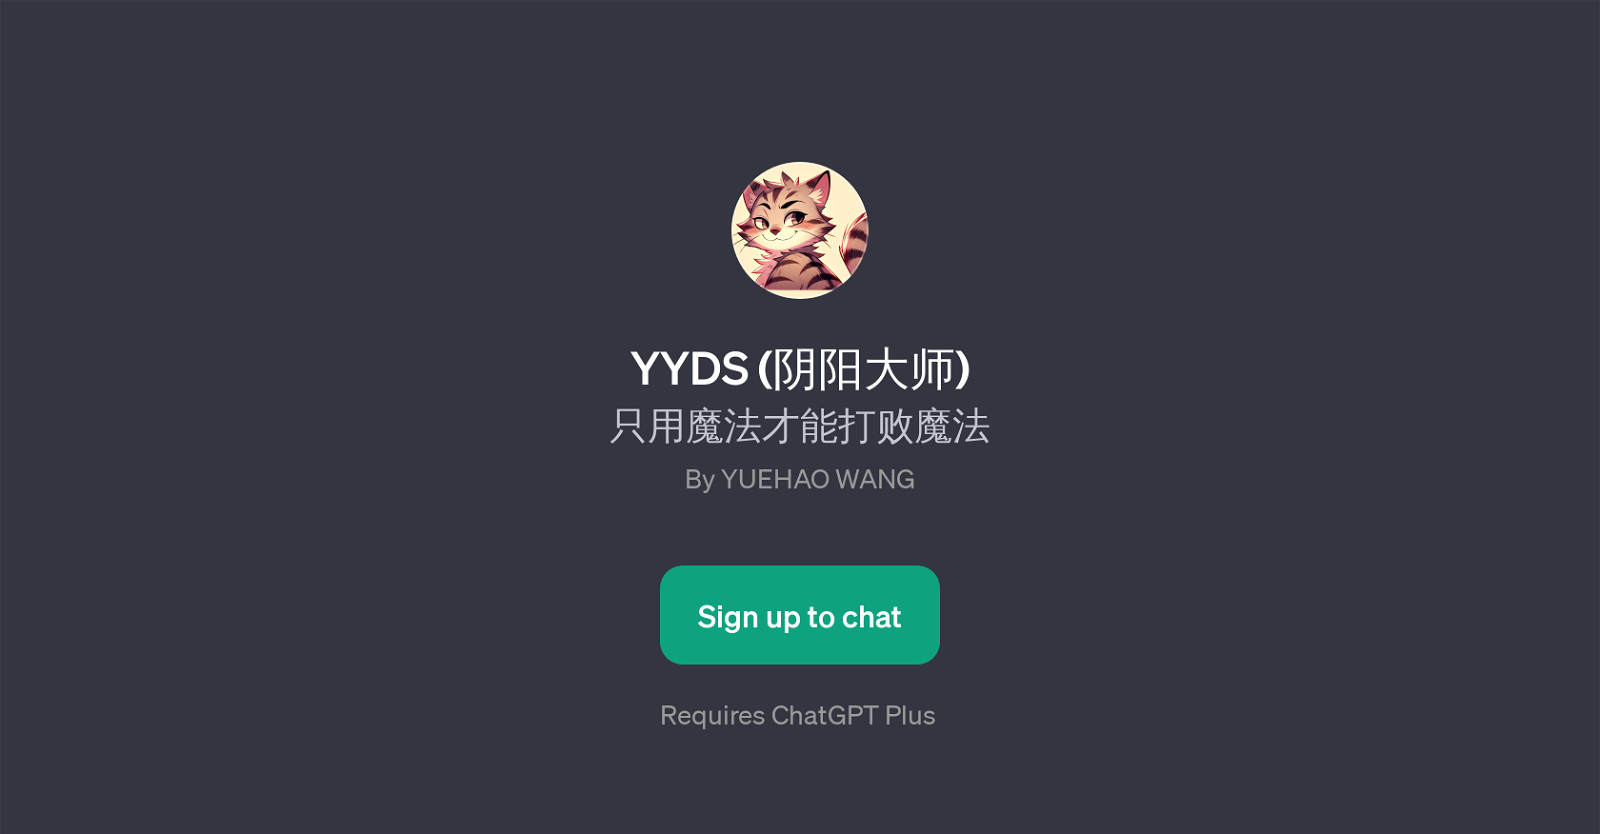 YYDS () website